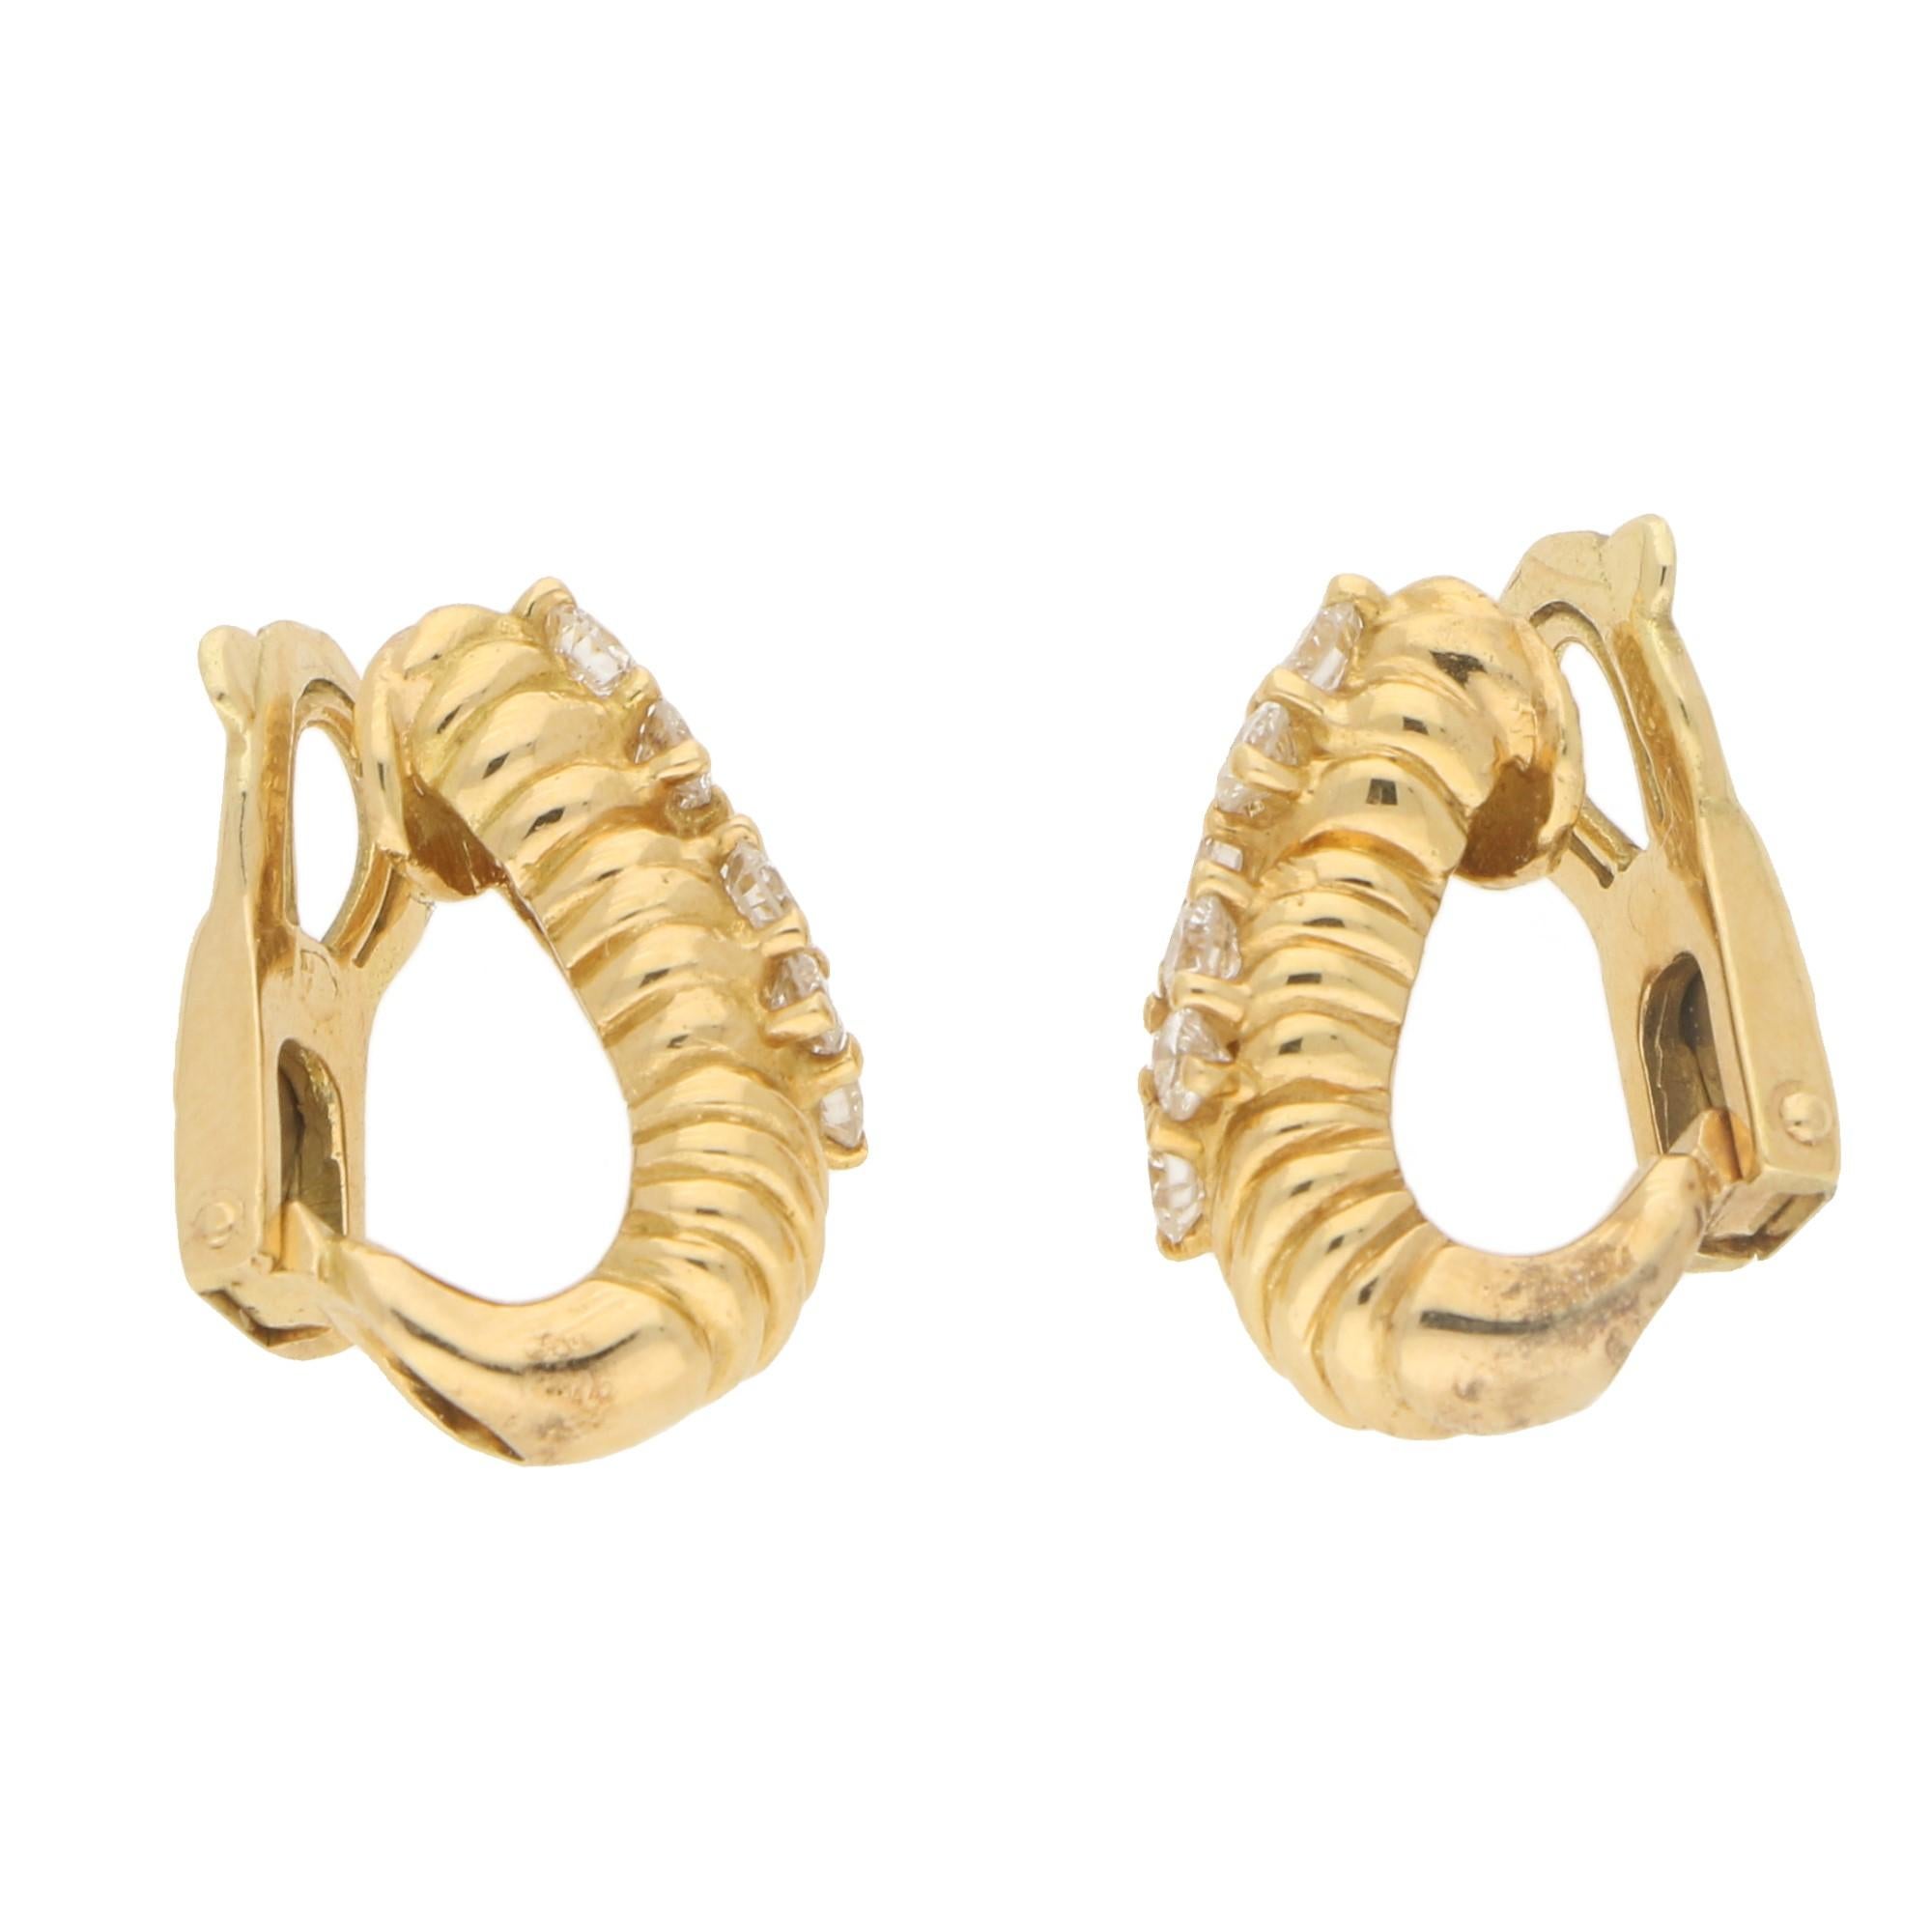 Round Cut Boucheron Diamond Clip Stud Half Hoop Earrings in 18 Karat Yellow Gold